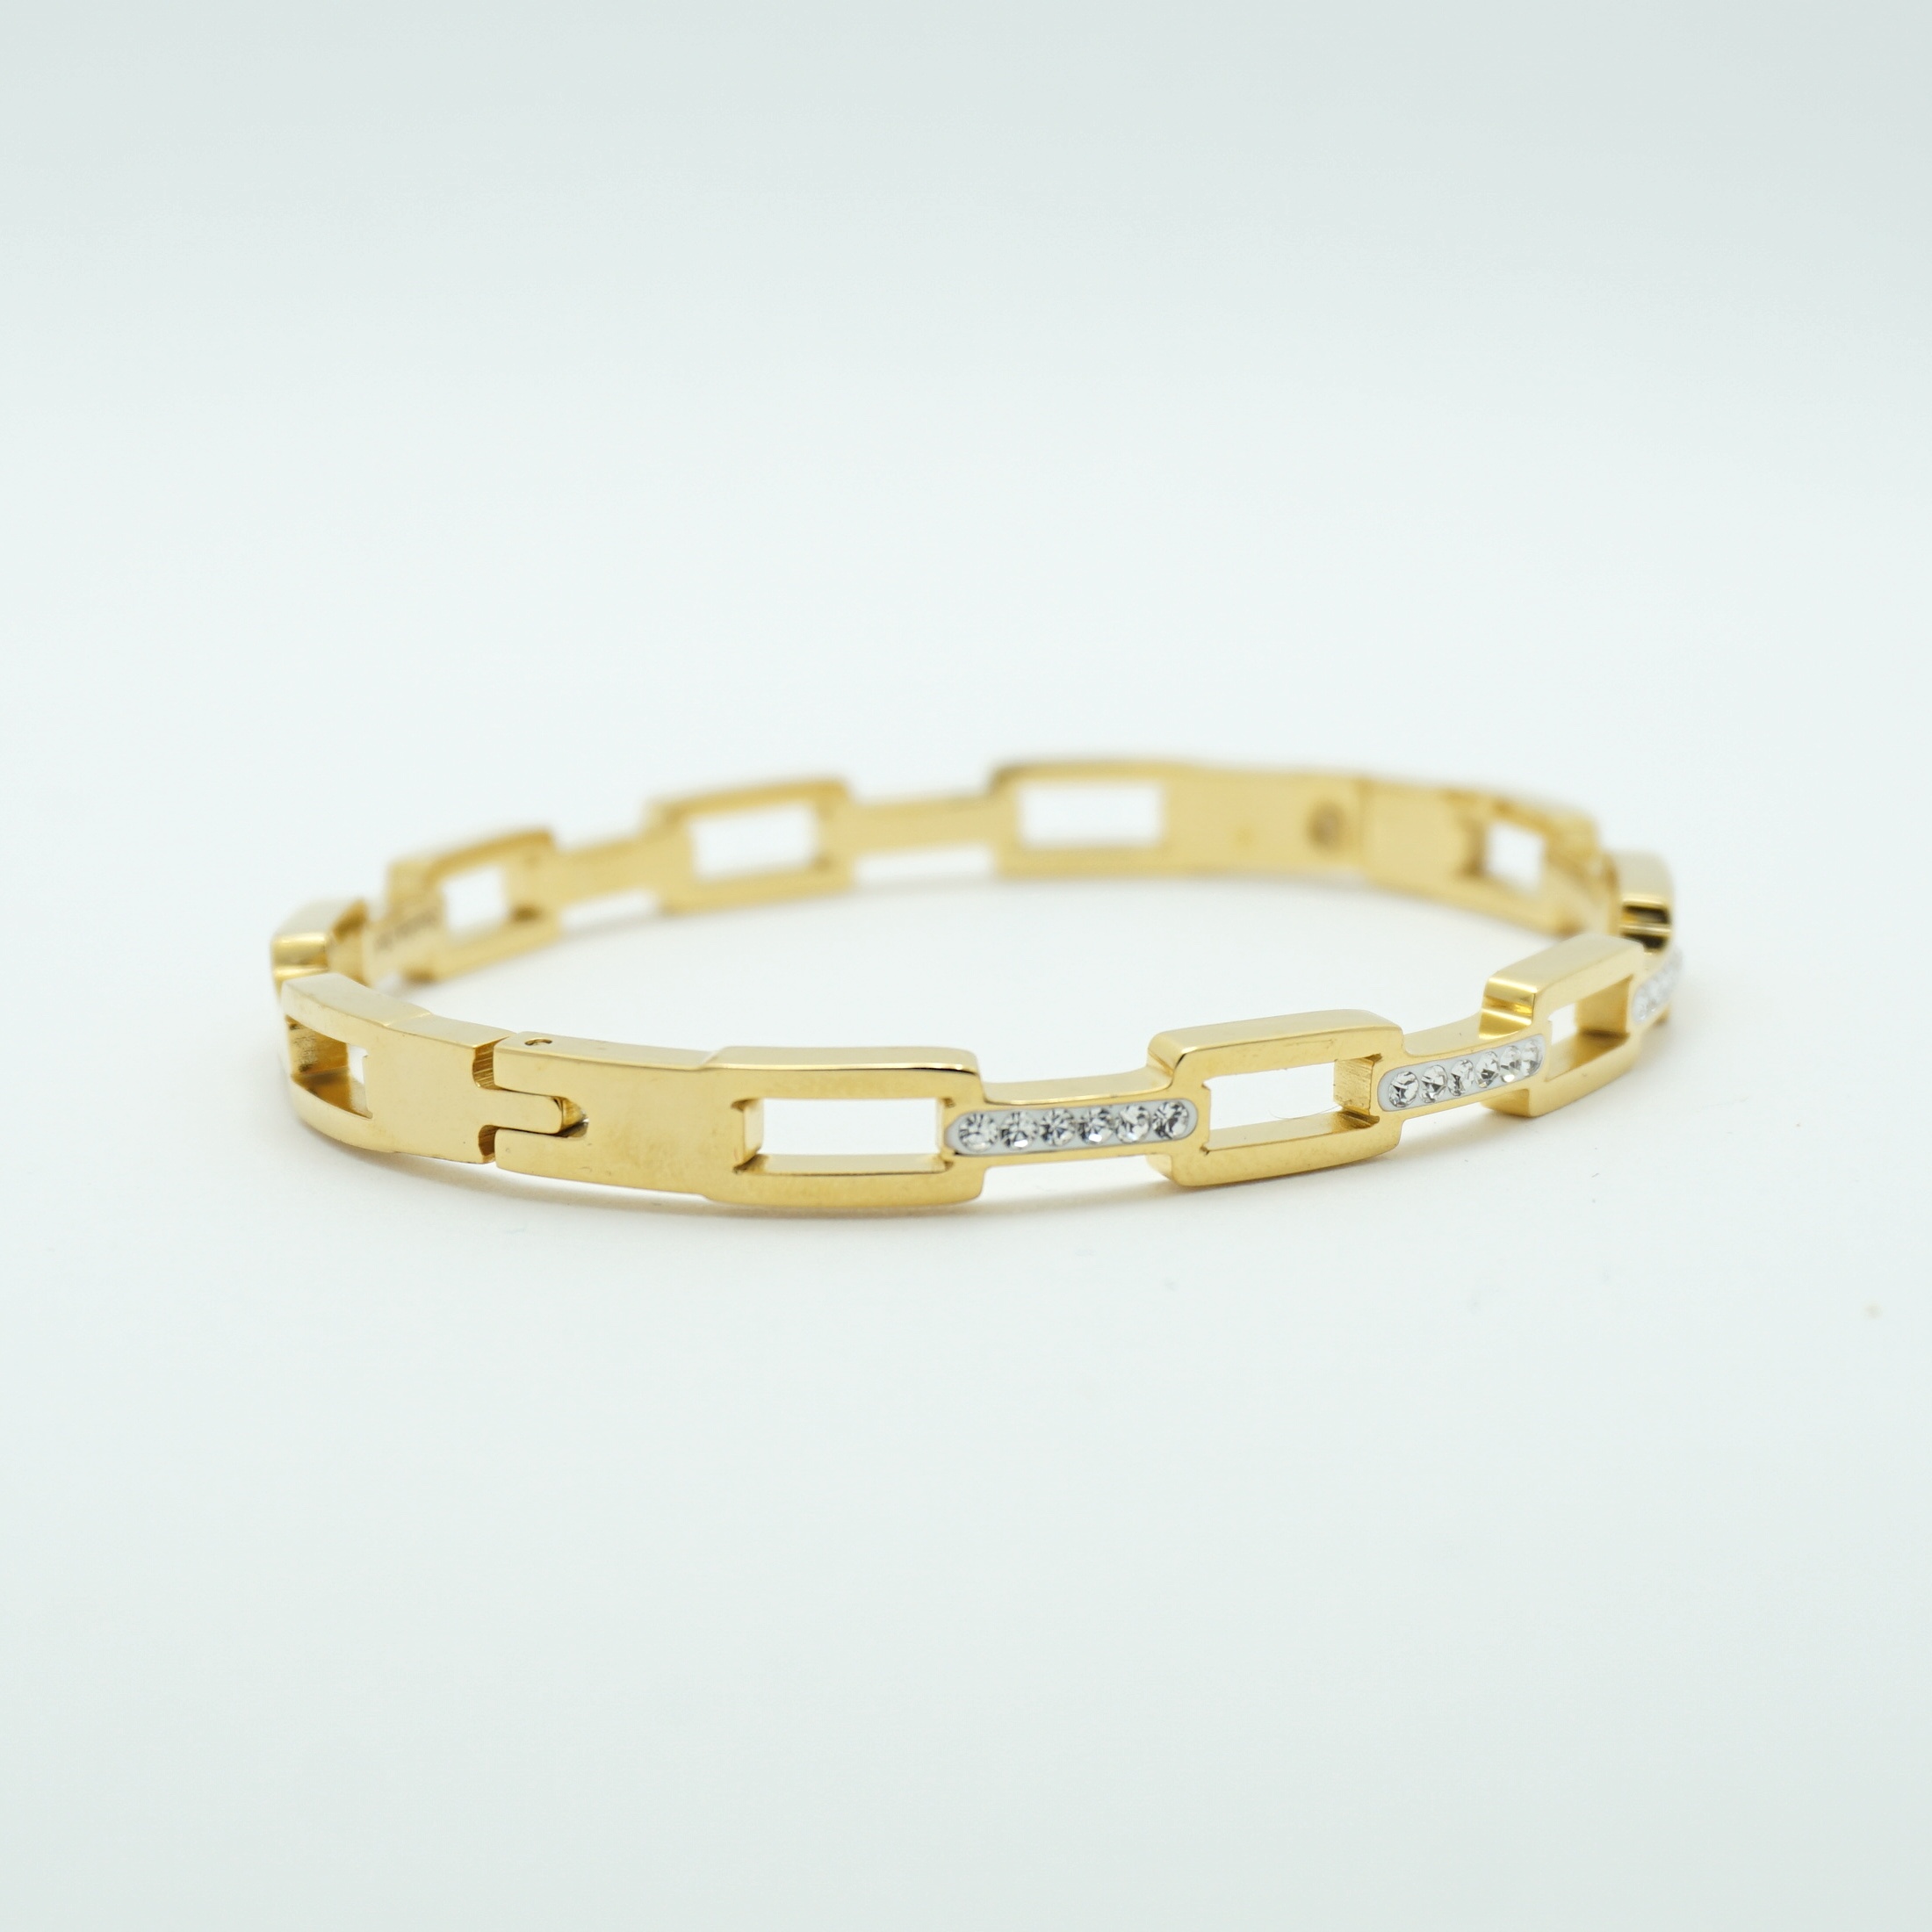 Chain Link Crystal Bangle Bracelet in Gold